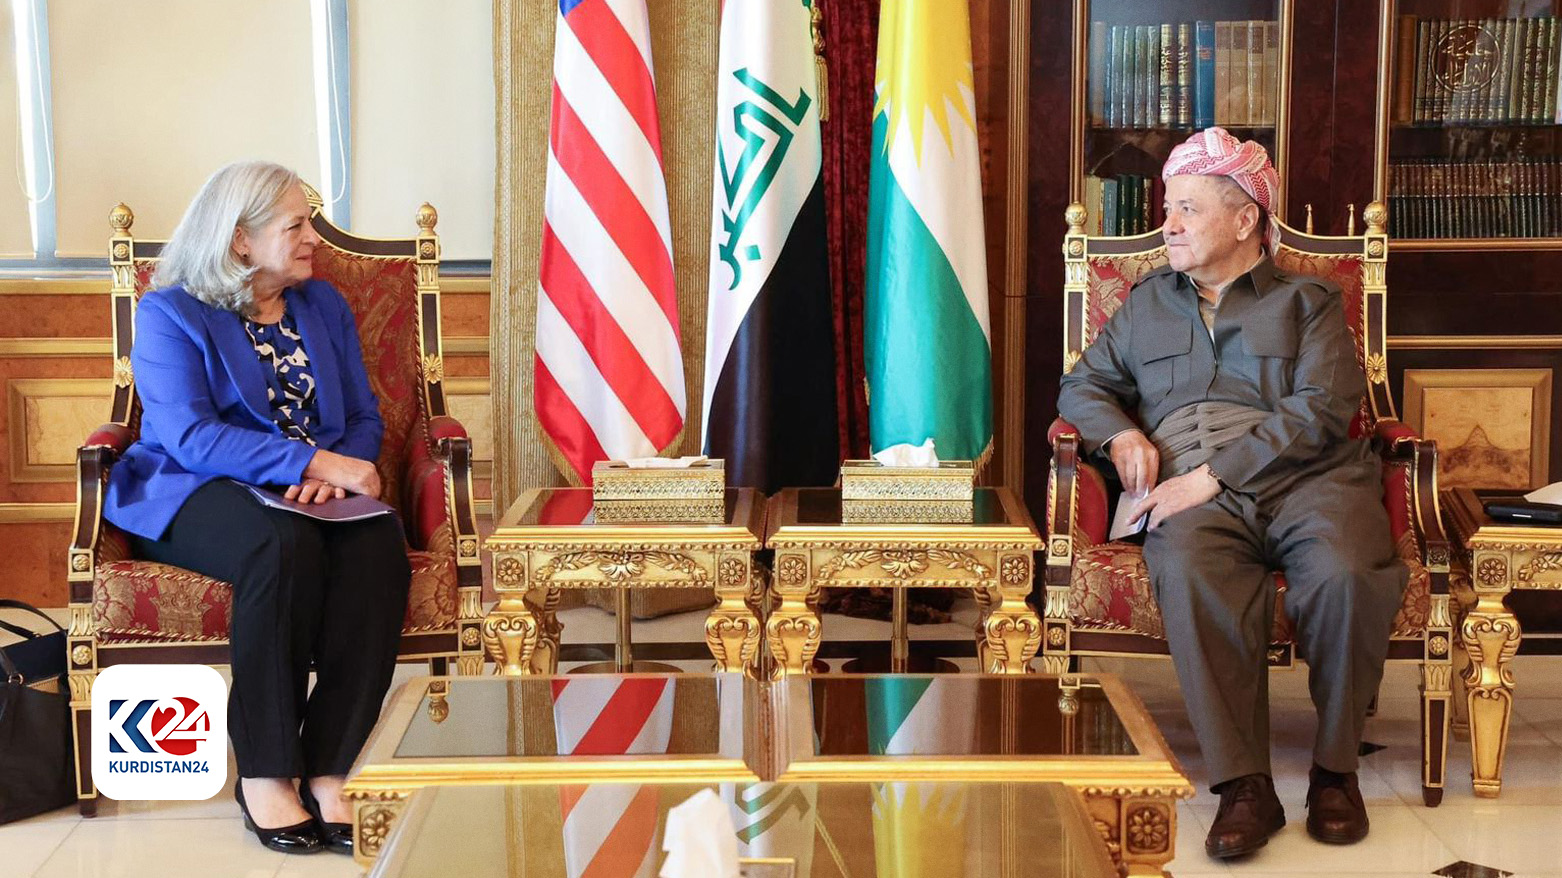 KDP President Masoud Barzani US Ambassador address upcoming parliamentary elections